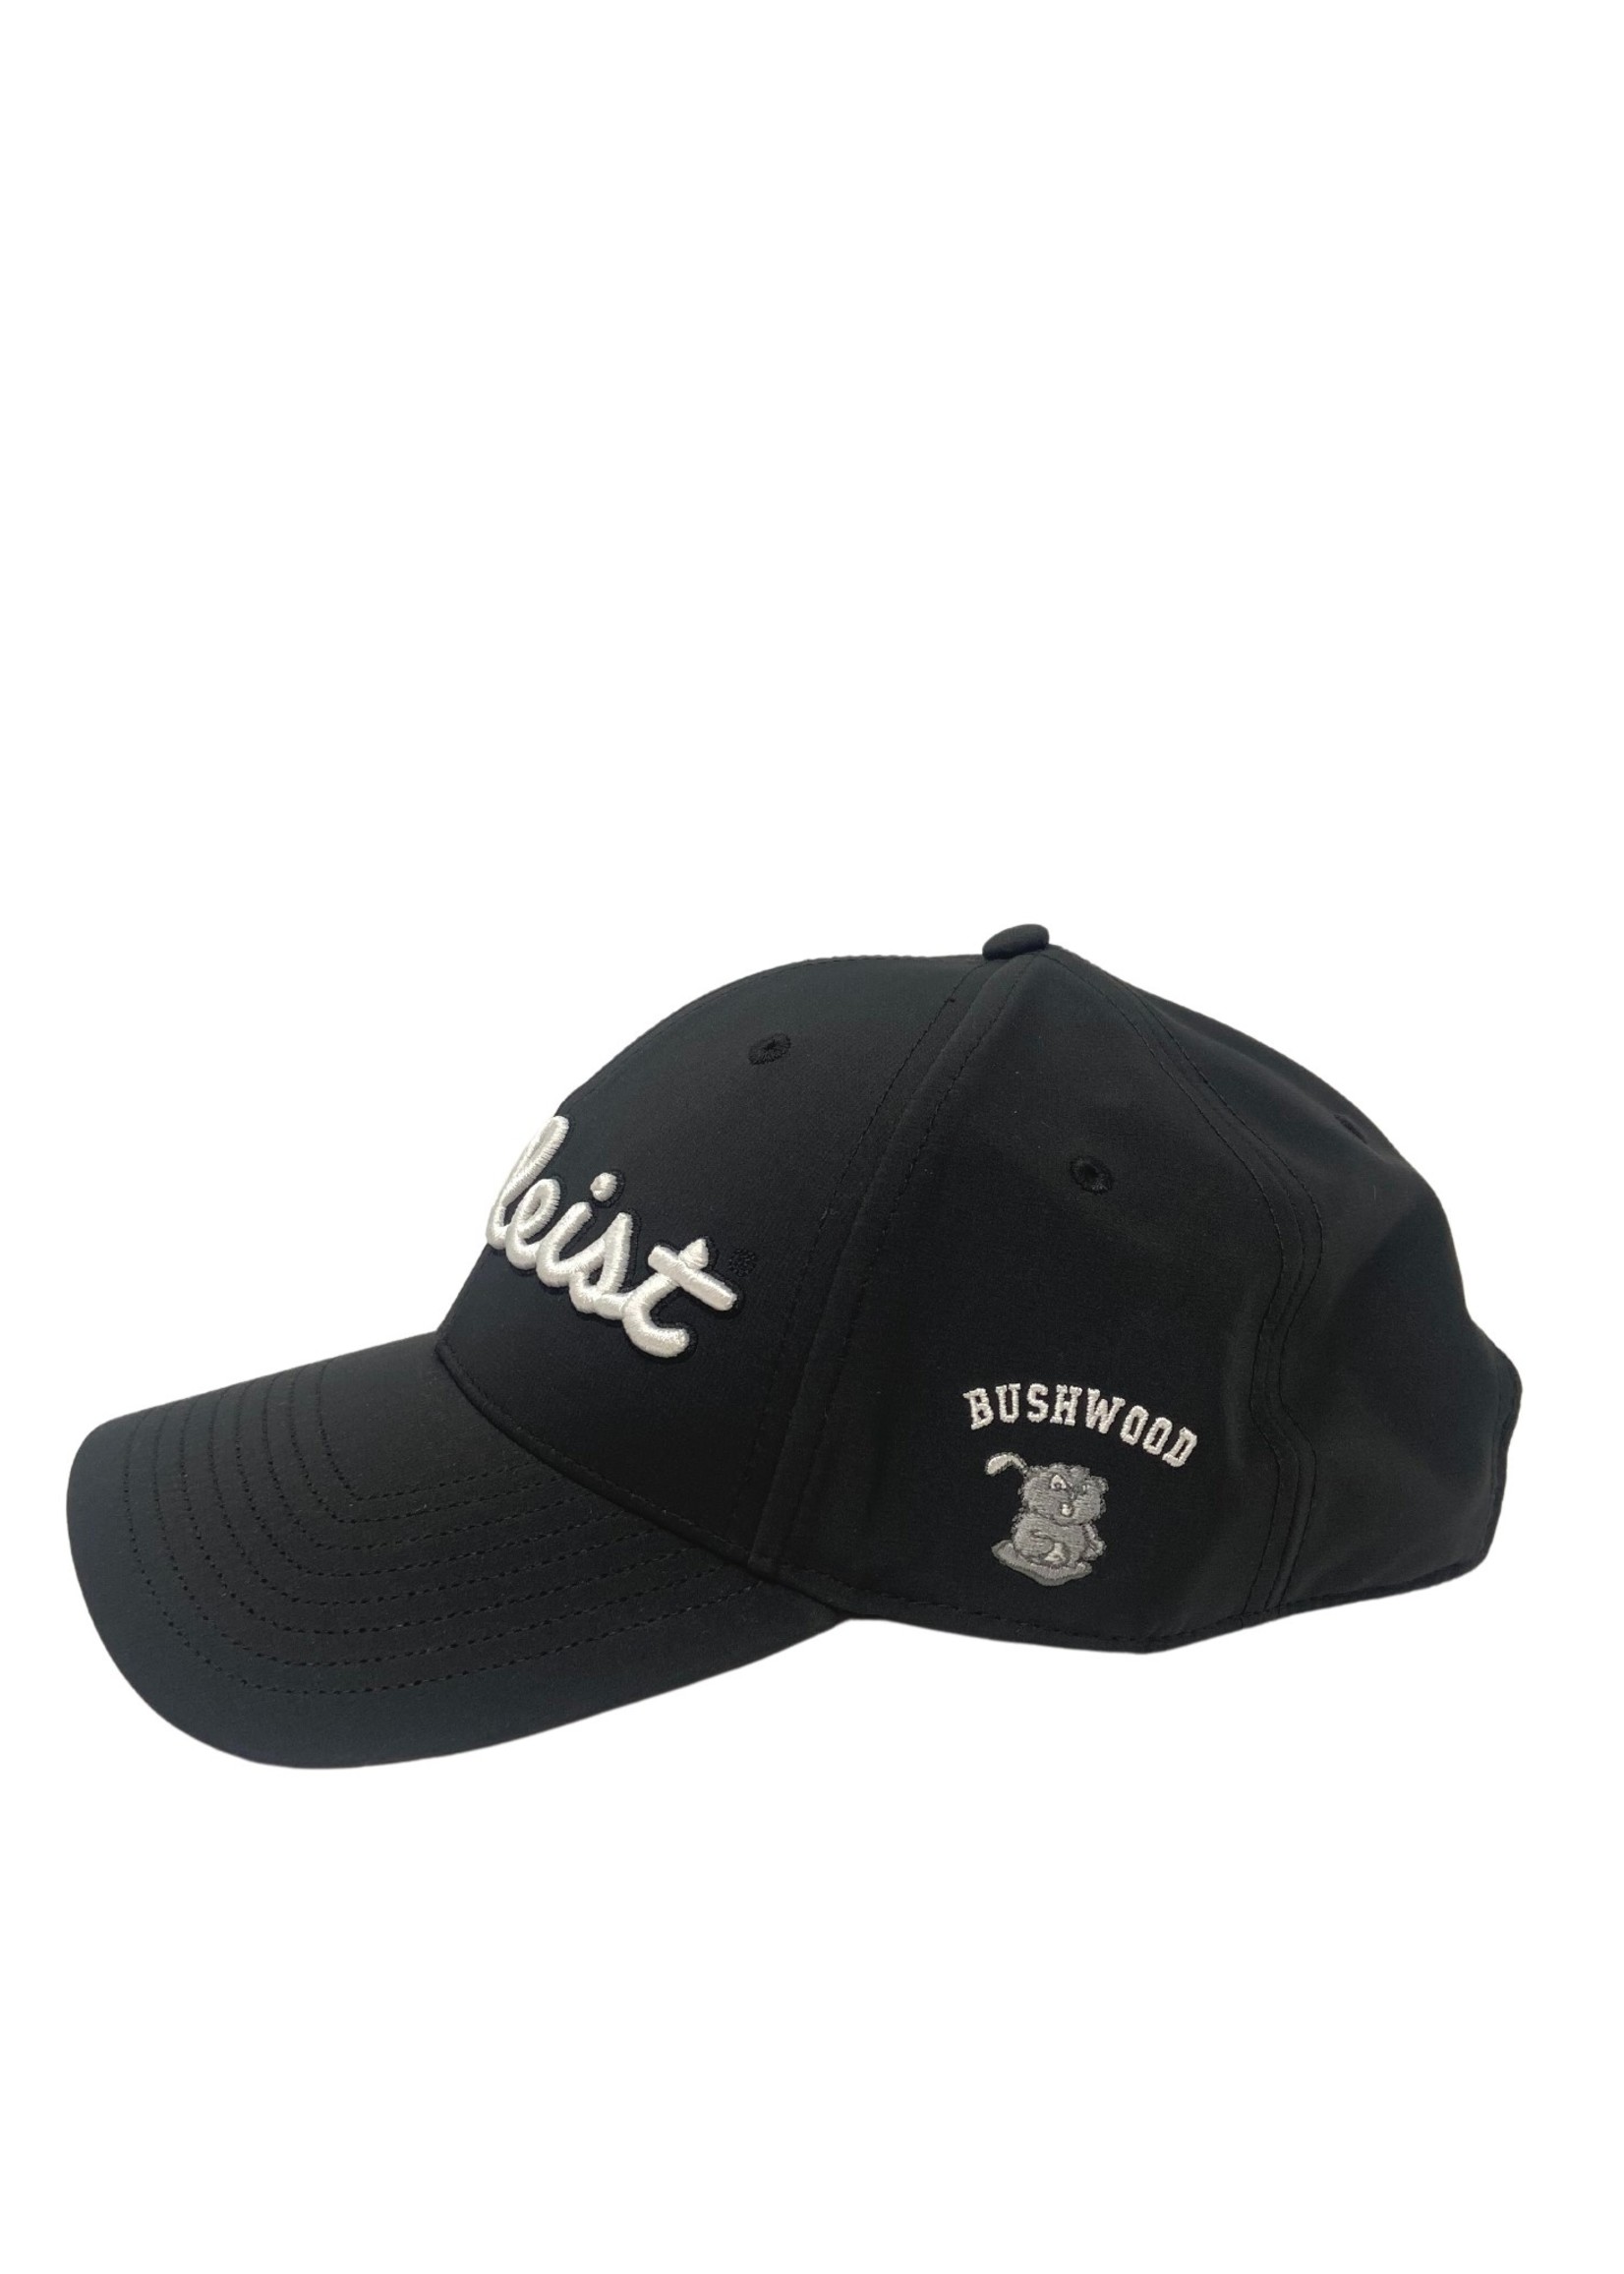 Titleist Bushwood Logo Titleist Baseball Hat